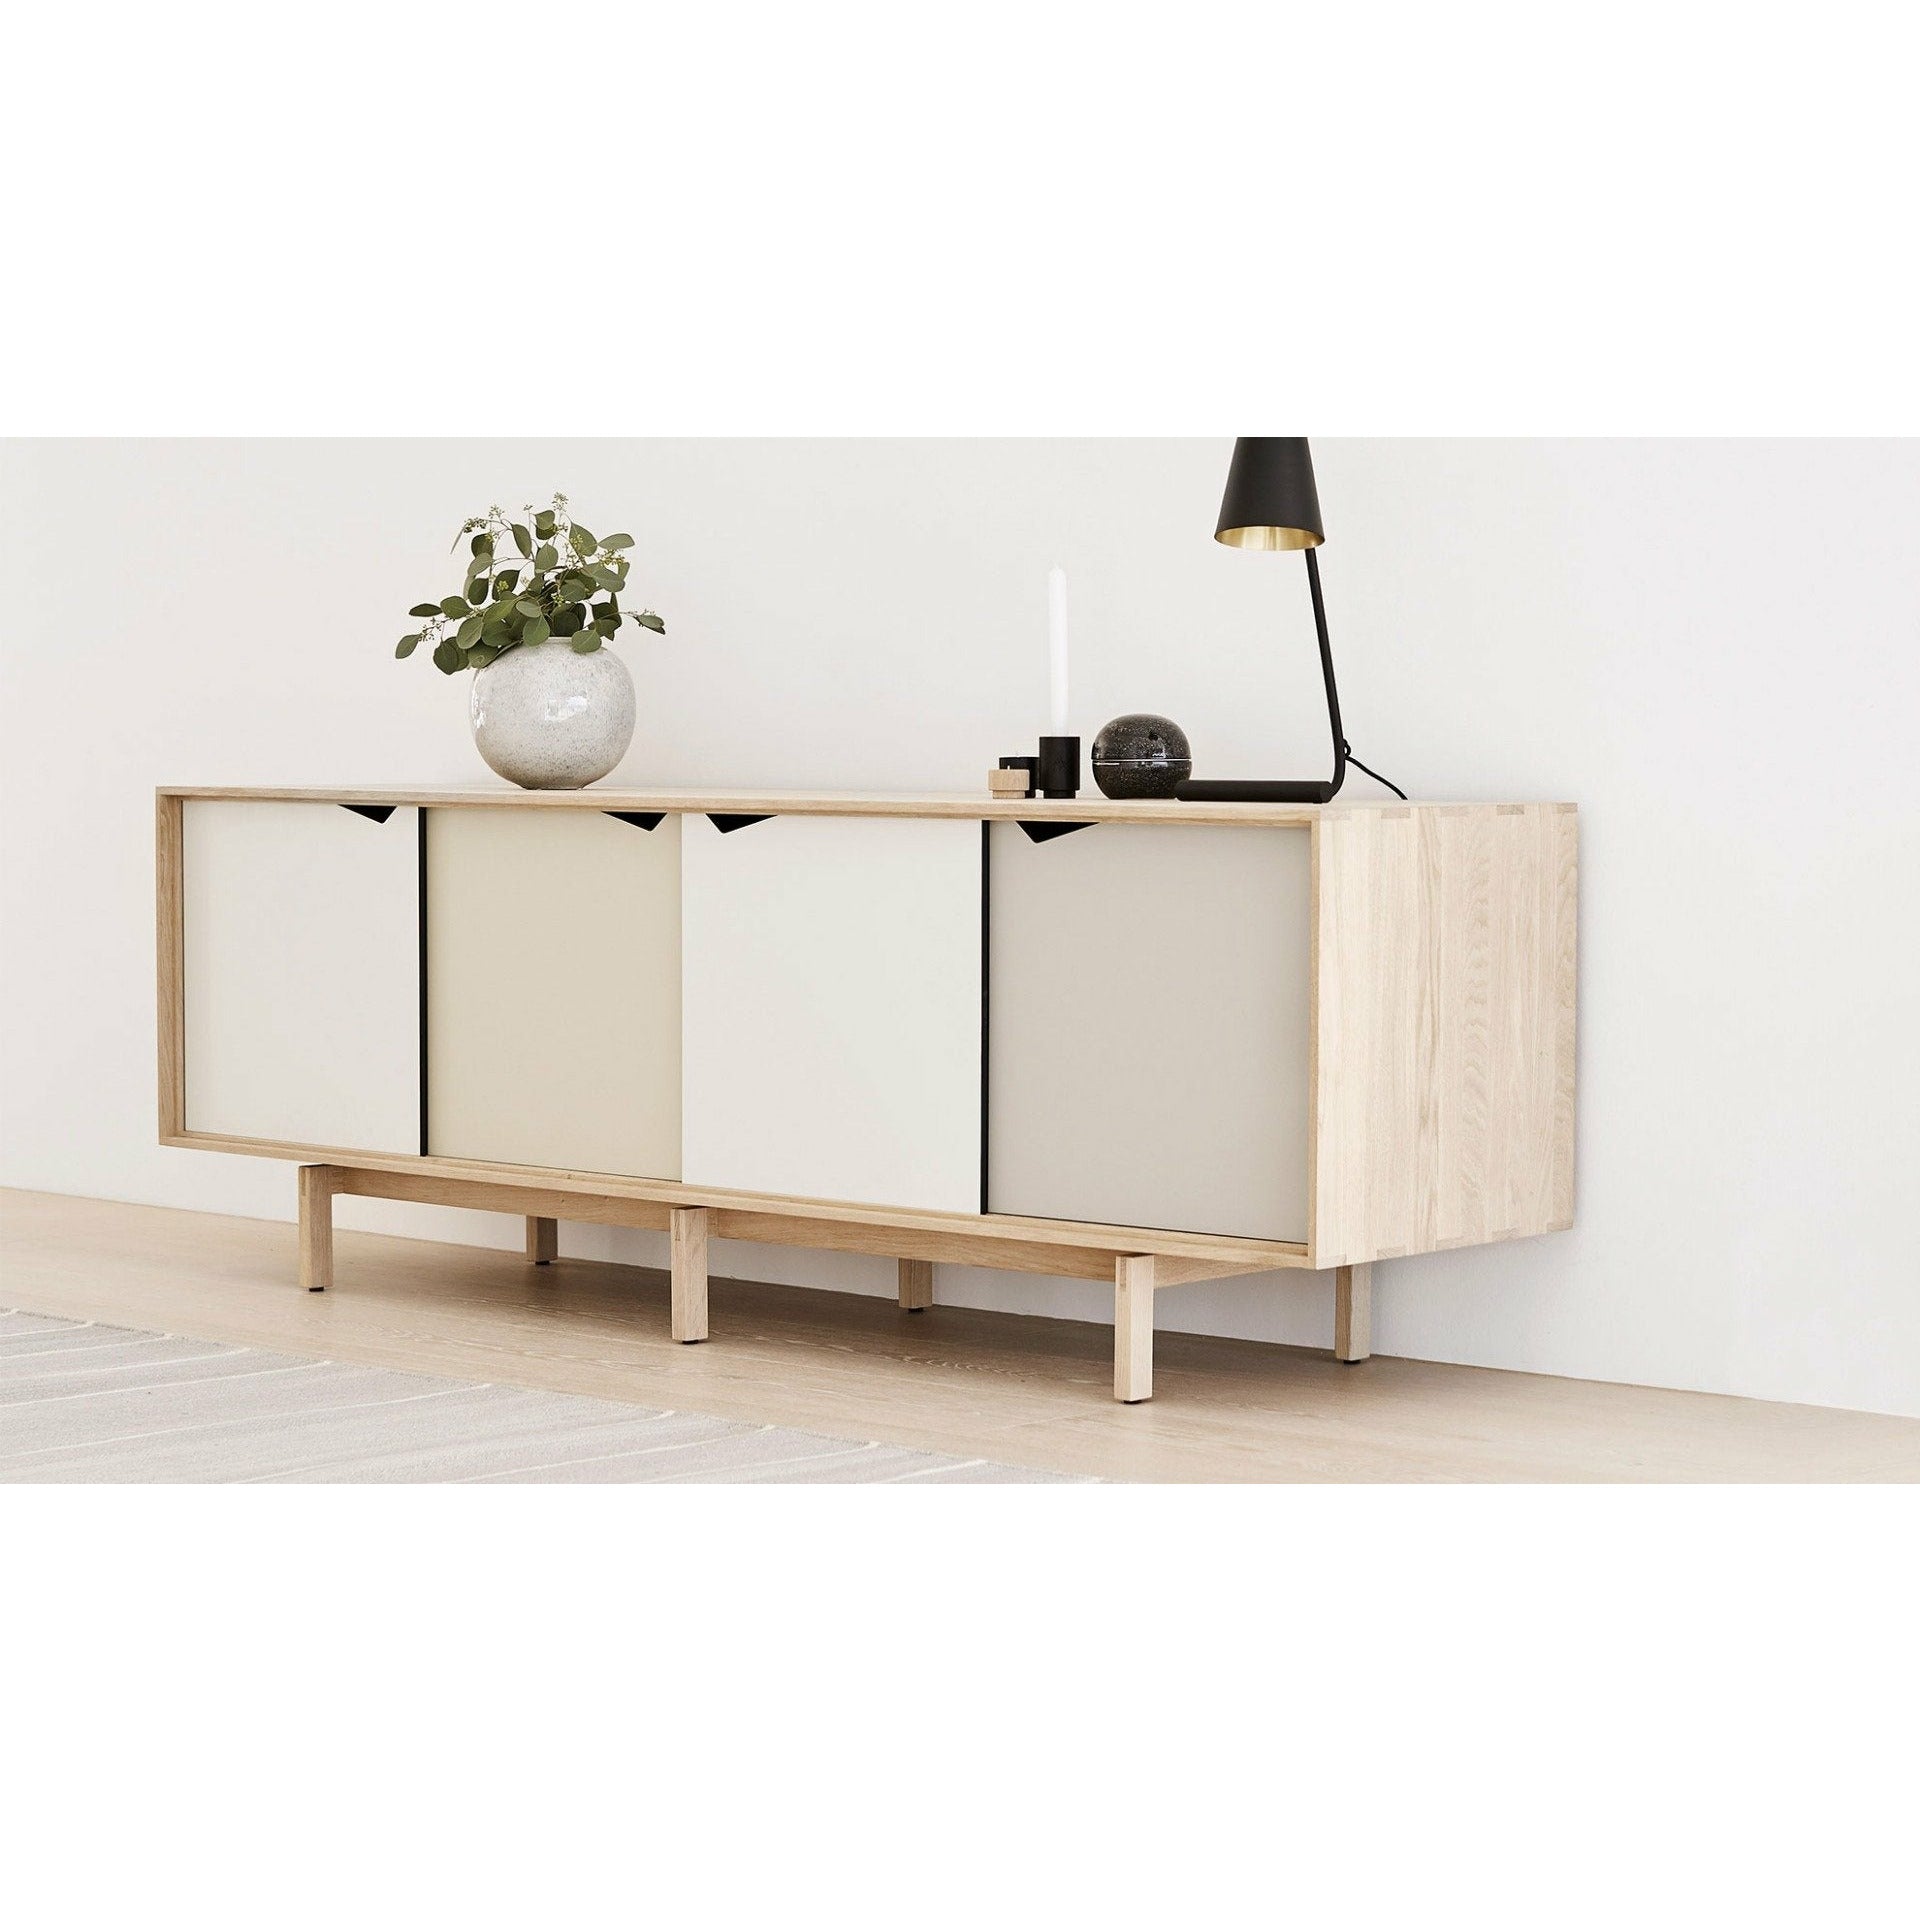 Annersen Furniture S1 Batchon Savonage Oak, tiroirs blancs, 200 cm